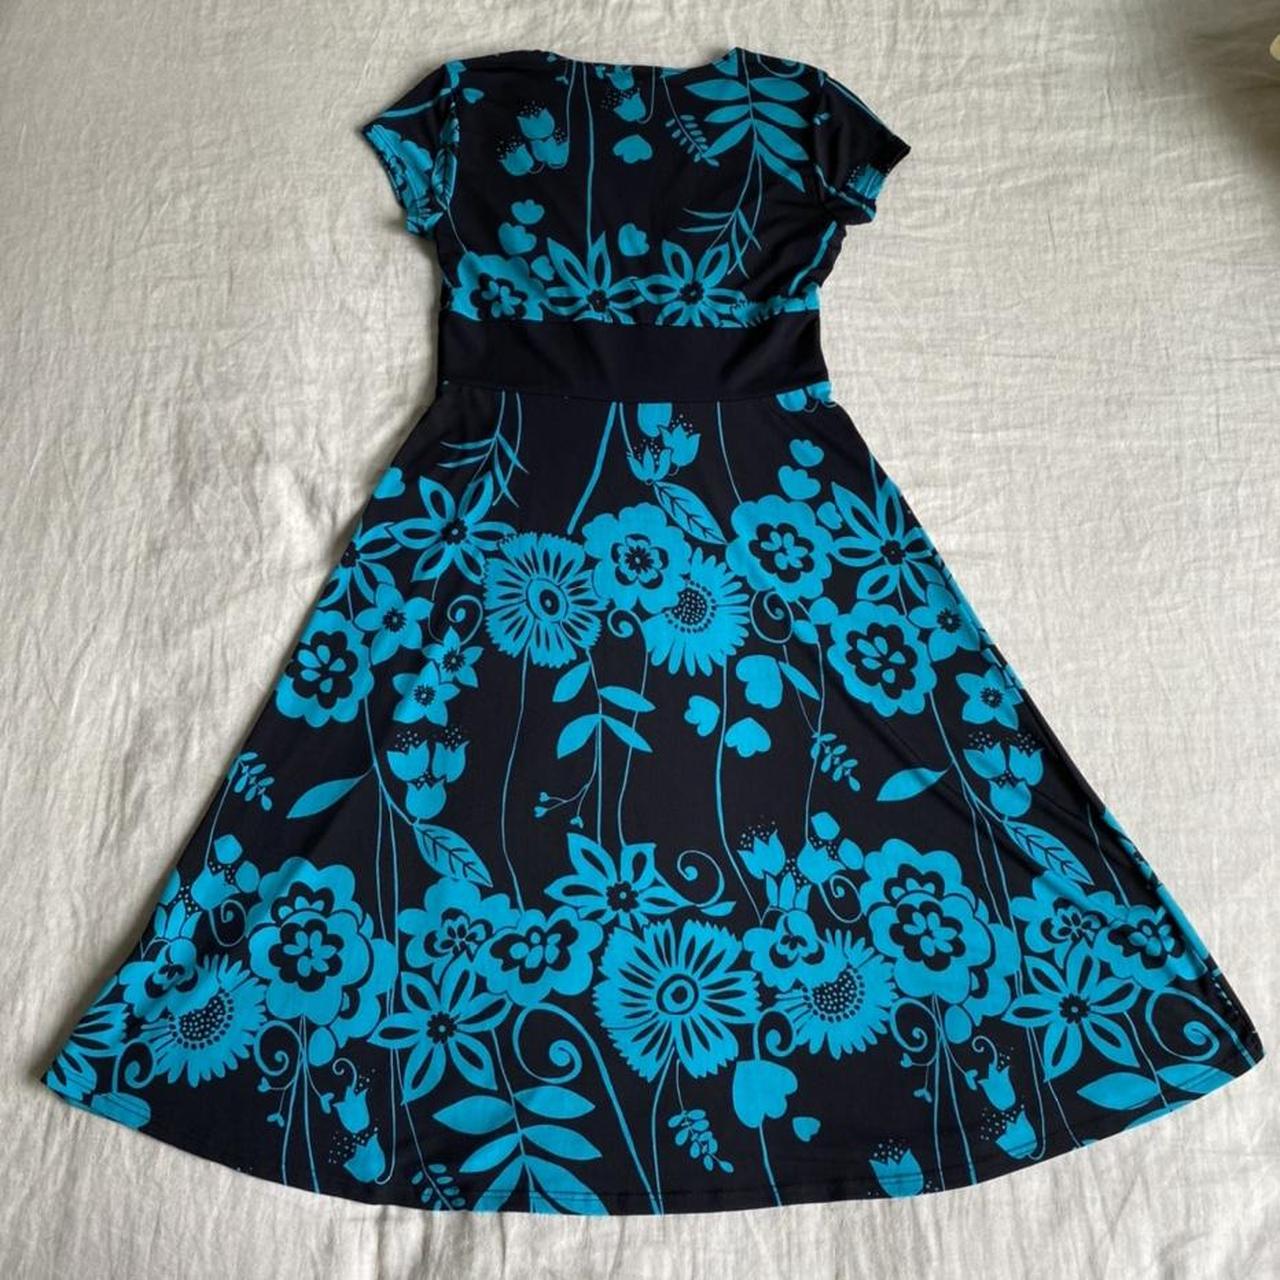 Enfocus Studio Women's Blue and Black Dress (2)